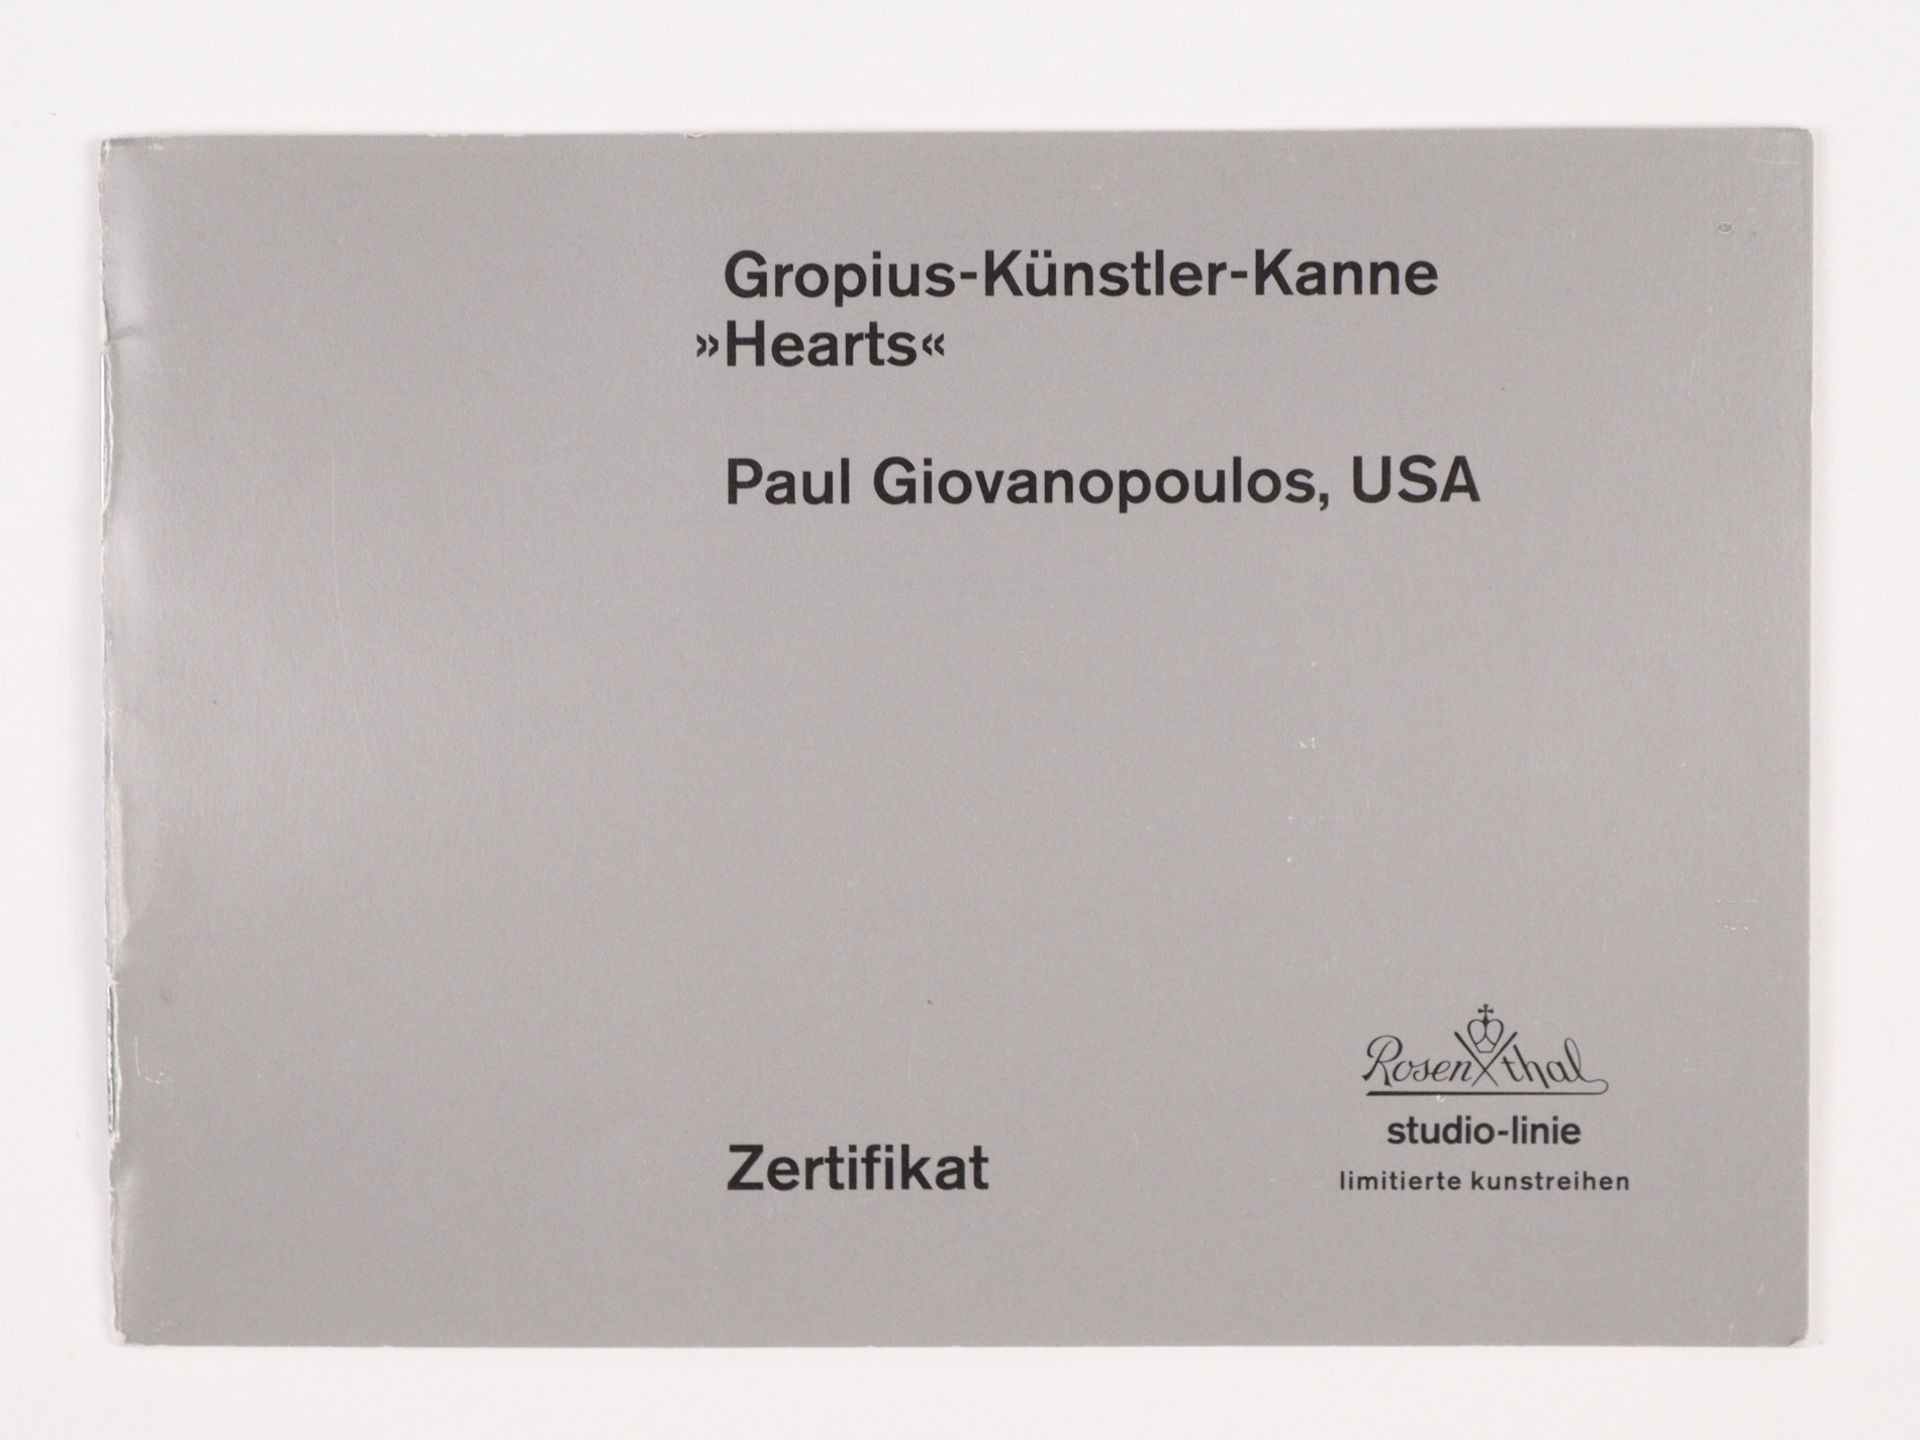 Rosenthal studio-linie - Gropius-Künstler-Kanne Paul Giovanopoulos, USA - Image 2 of 8